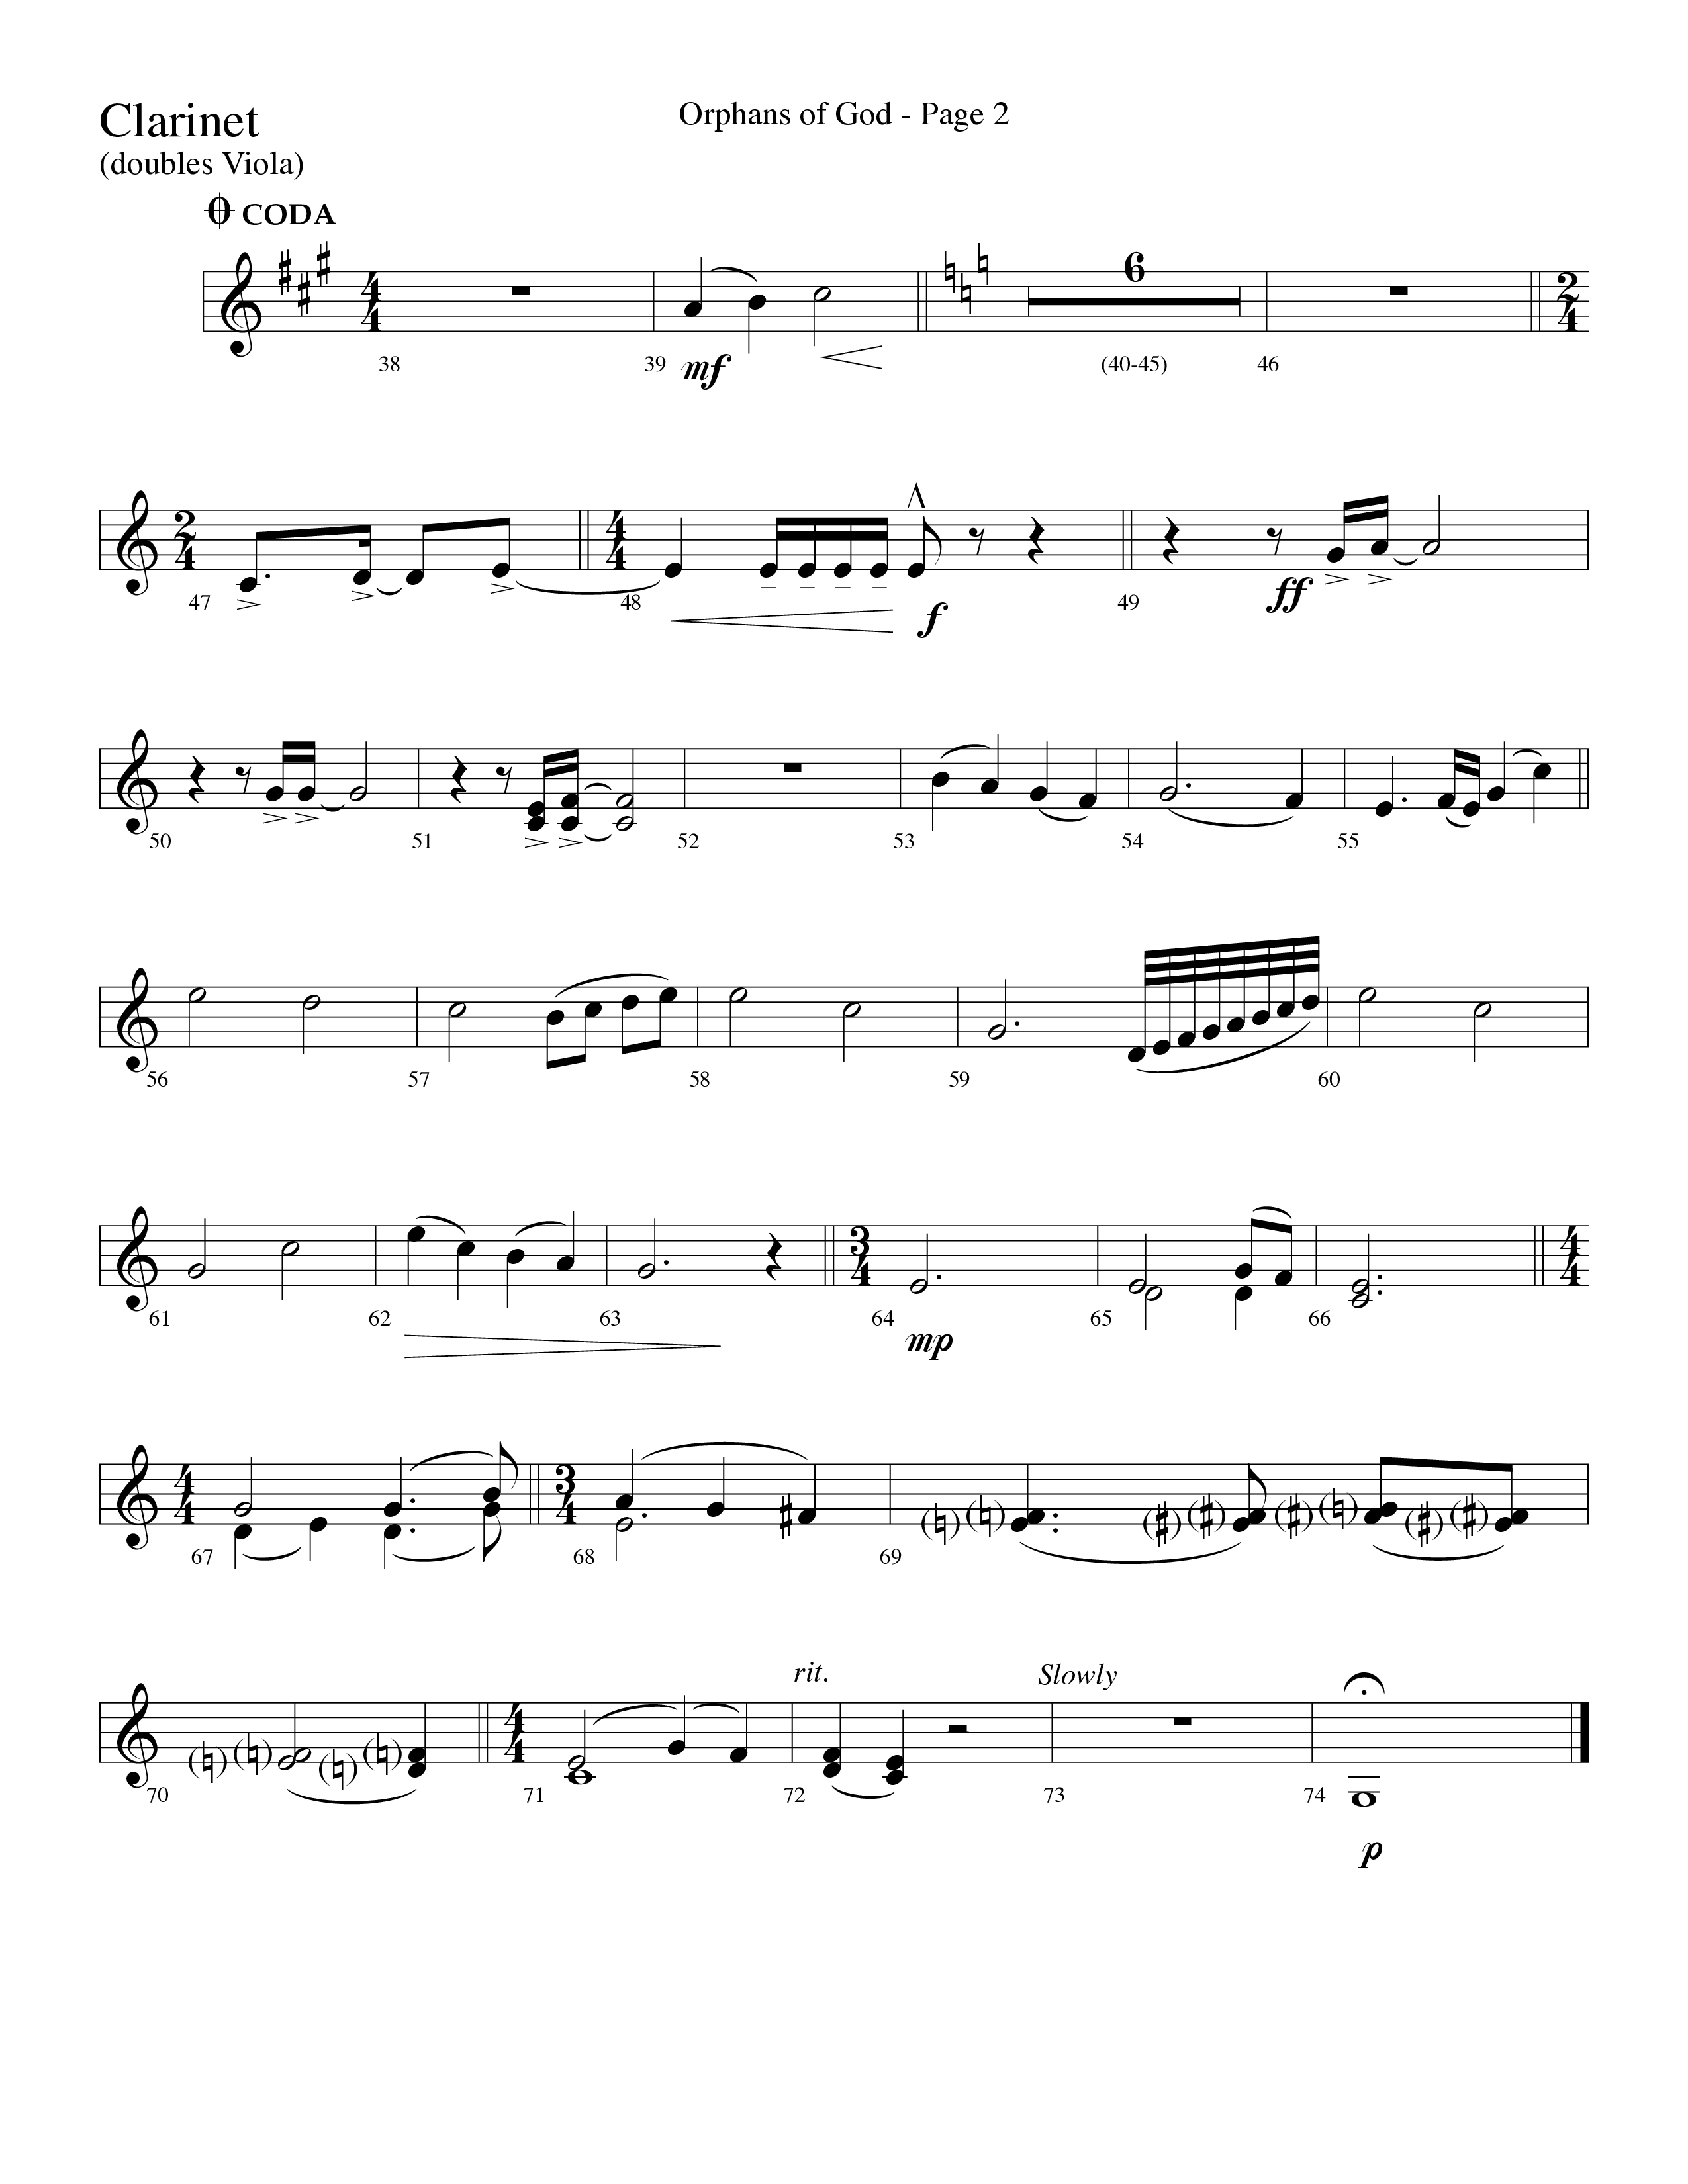 Orphans Of God (Choral Anthem SATB) Clarinet (Lifeway Choral / Arr. Dave Williamson)